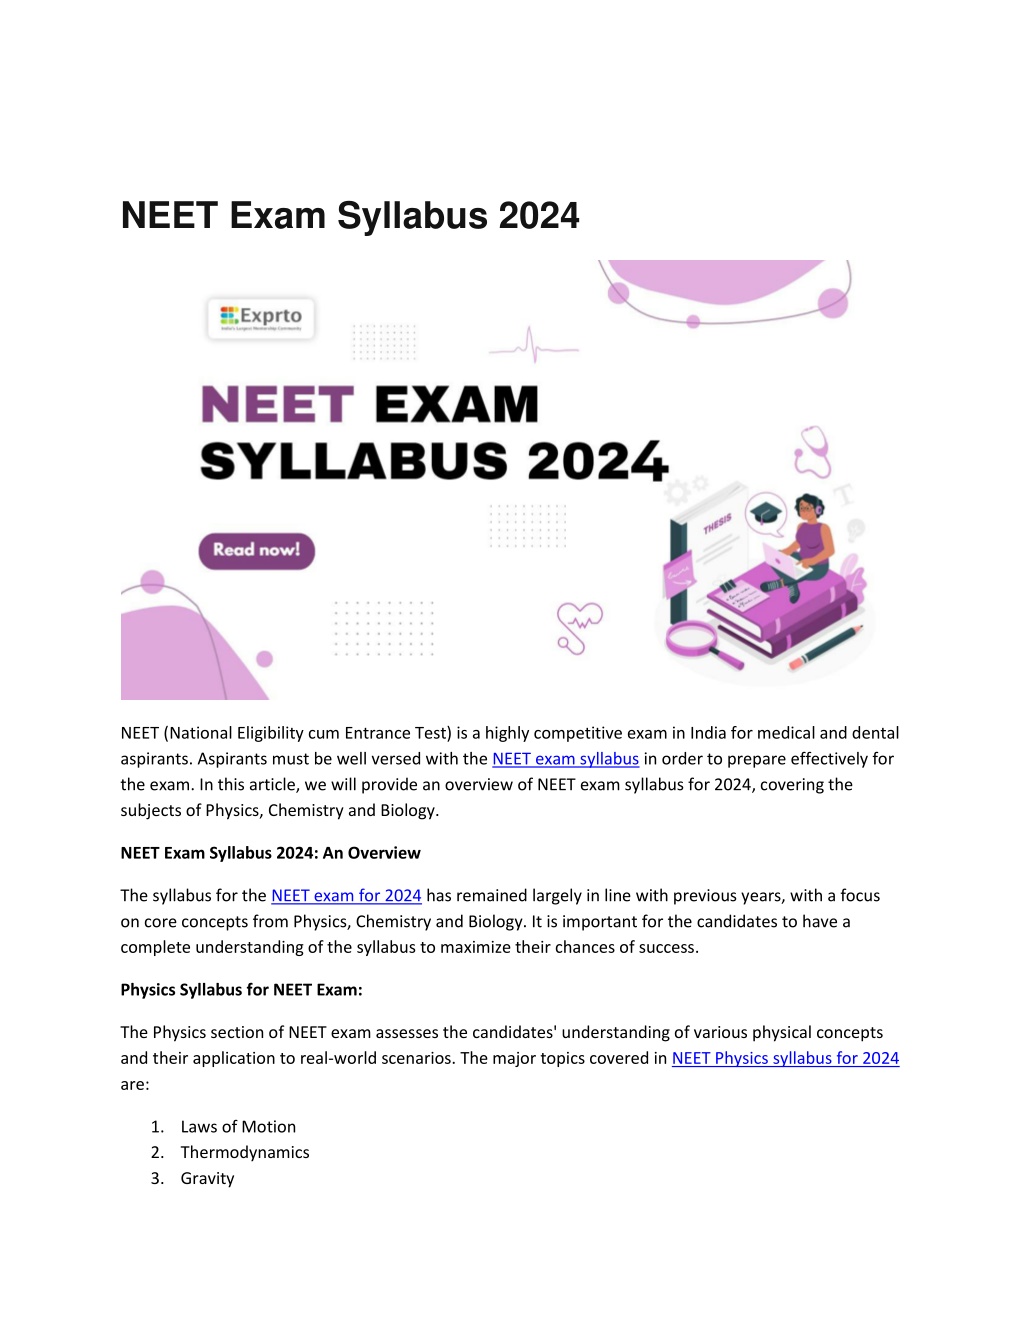 PPT NEET Exam Syllabus 2024 PowerPoint Presentation, free download